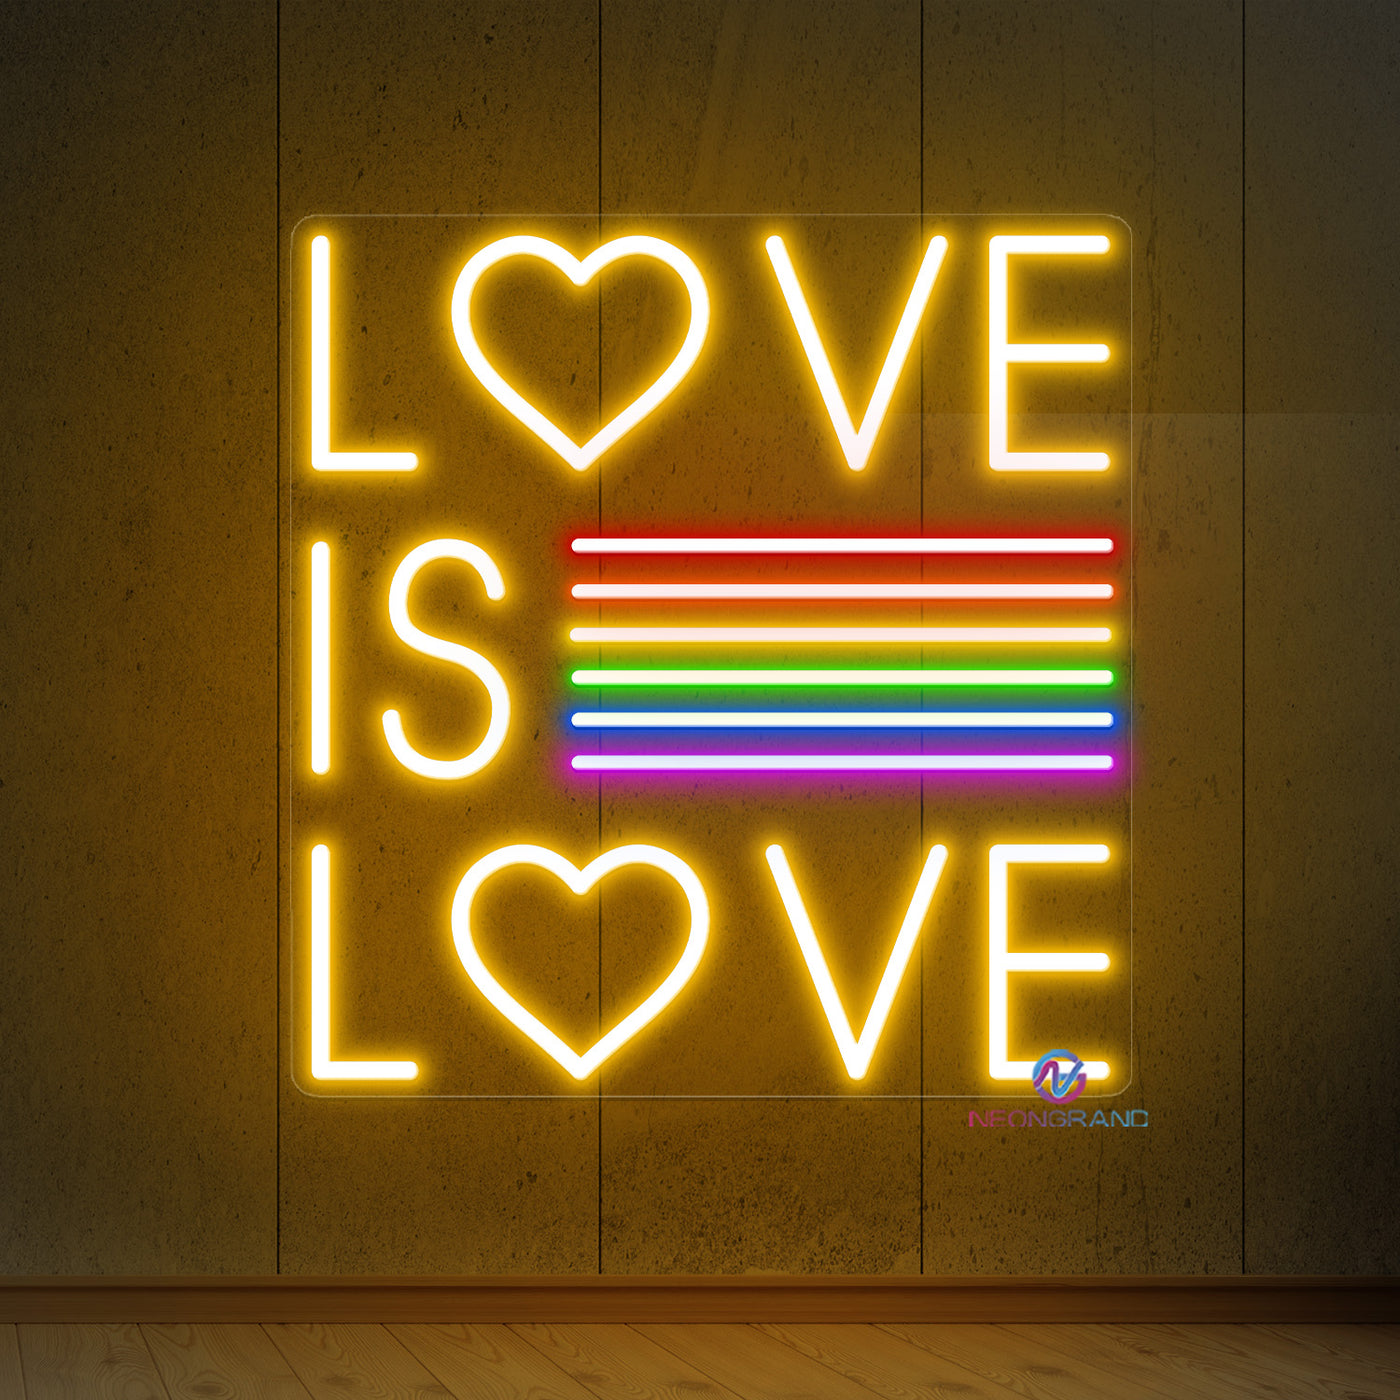 Love Is Love Neon Sign LGBTQ+ Led Light